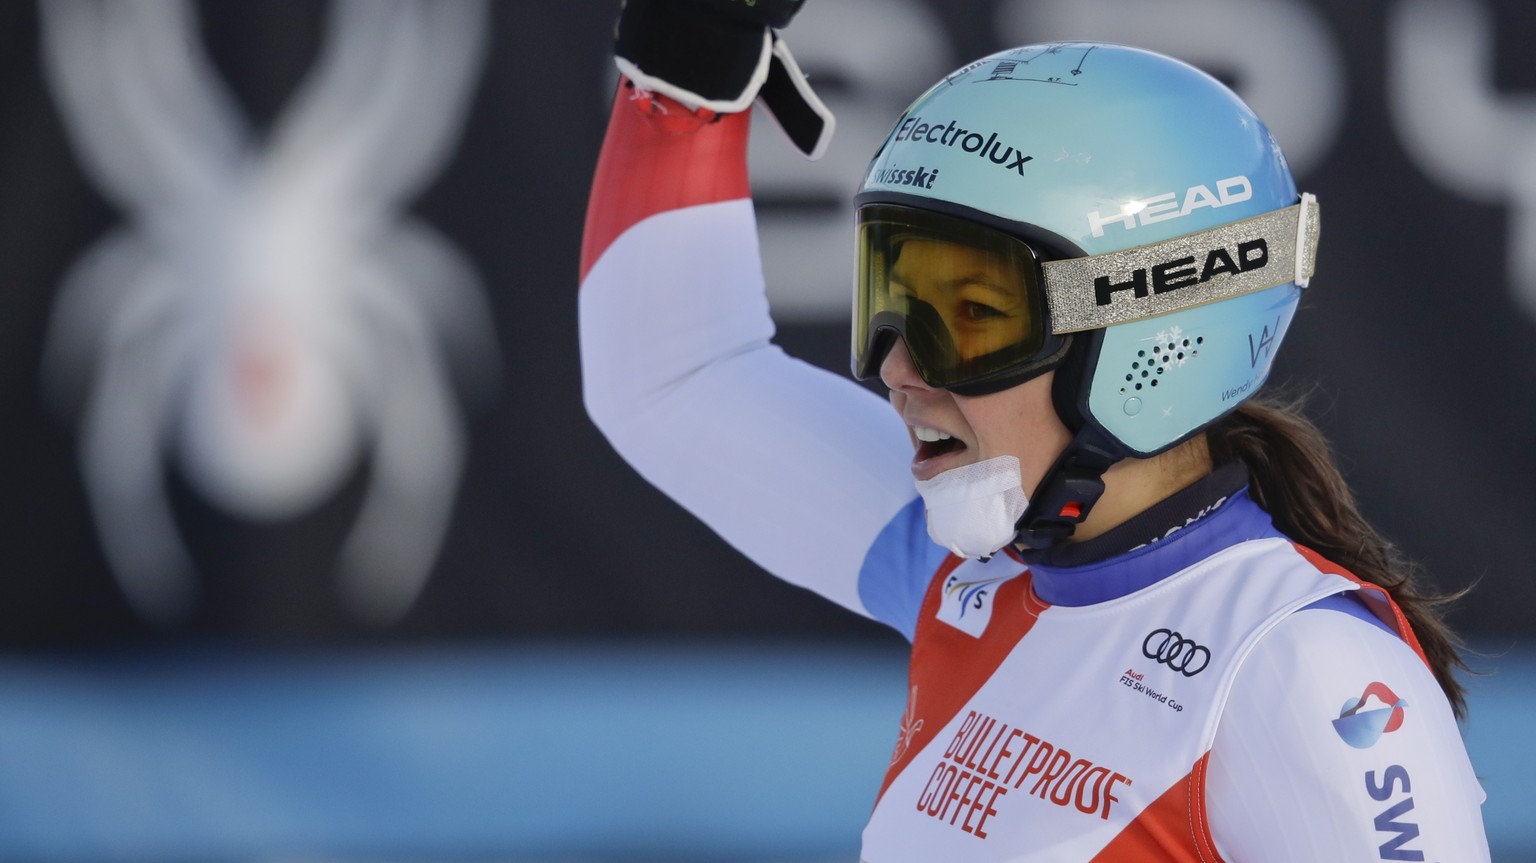 Switzerland's Wendy Holdener reacts after completing the alpine ski, women's World Cup giant slalom in Killington, Vt., Saturday, Nov. 24, 2018. (AP Photo/Charles Krupa)